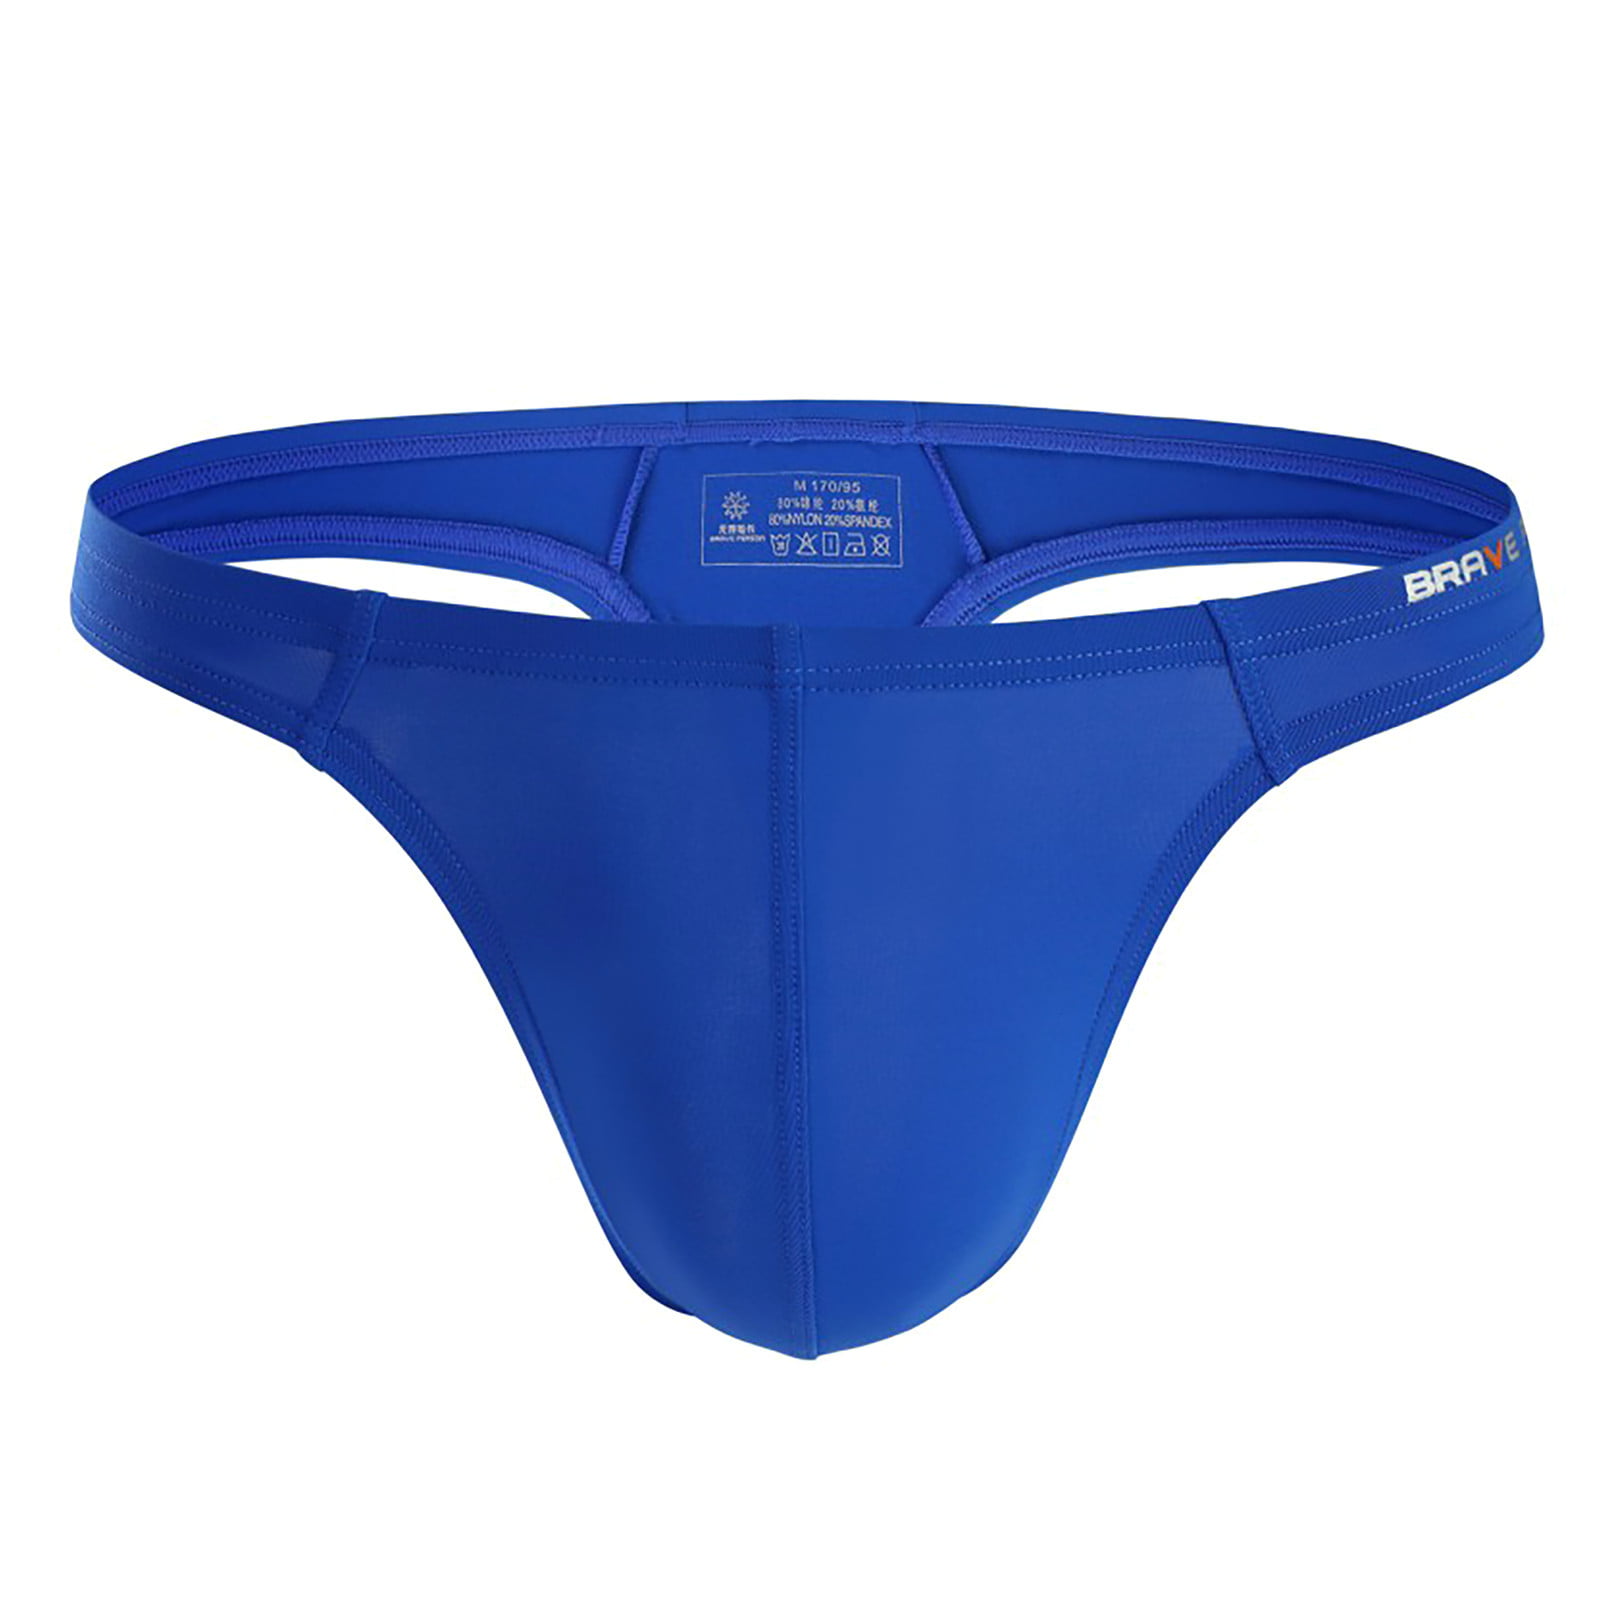 EHTMSAK Men's Stretch Trunk Underwear Classic Underwear Nylon Briefs Blue L  